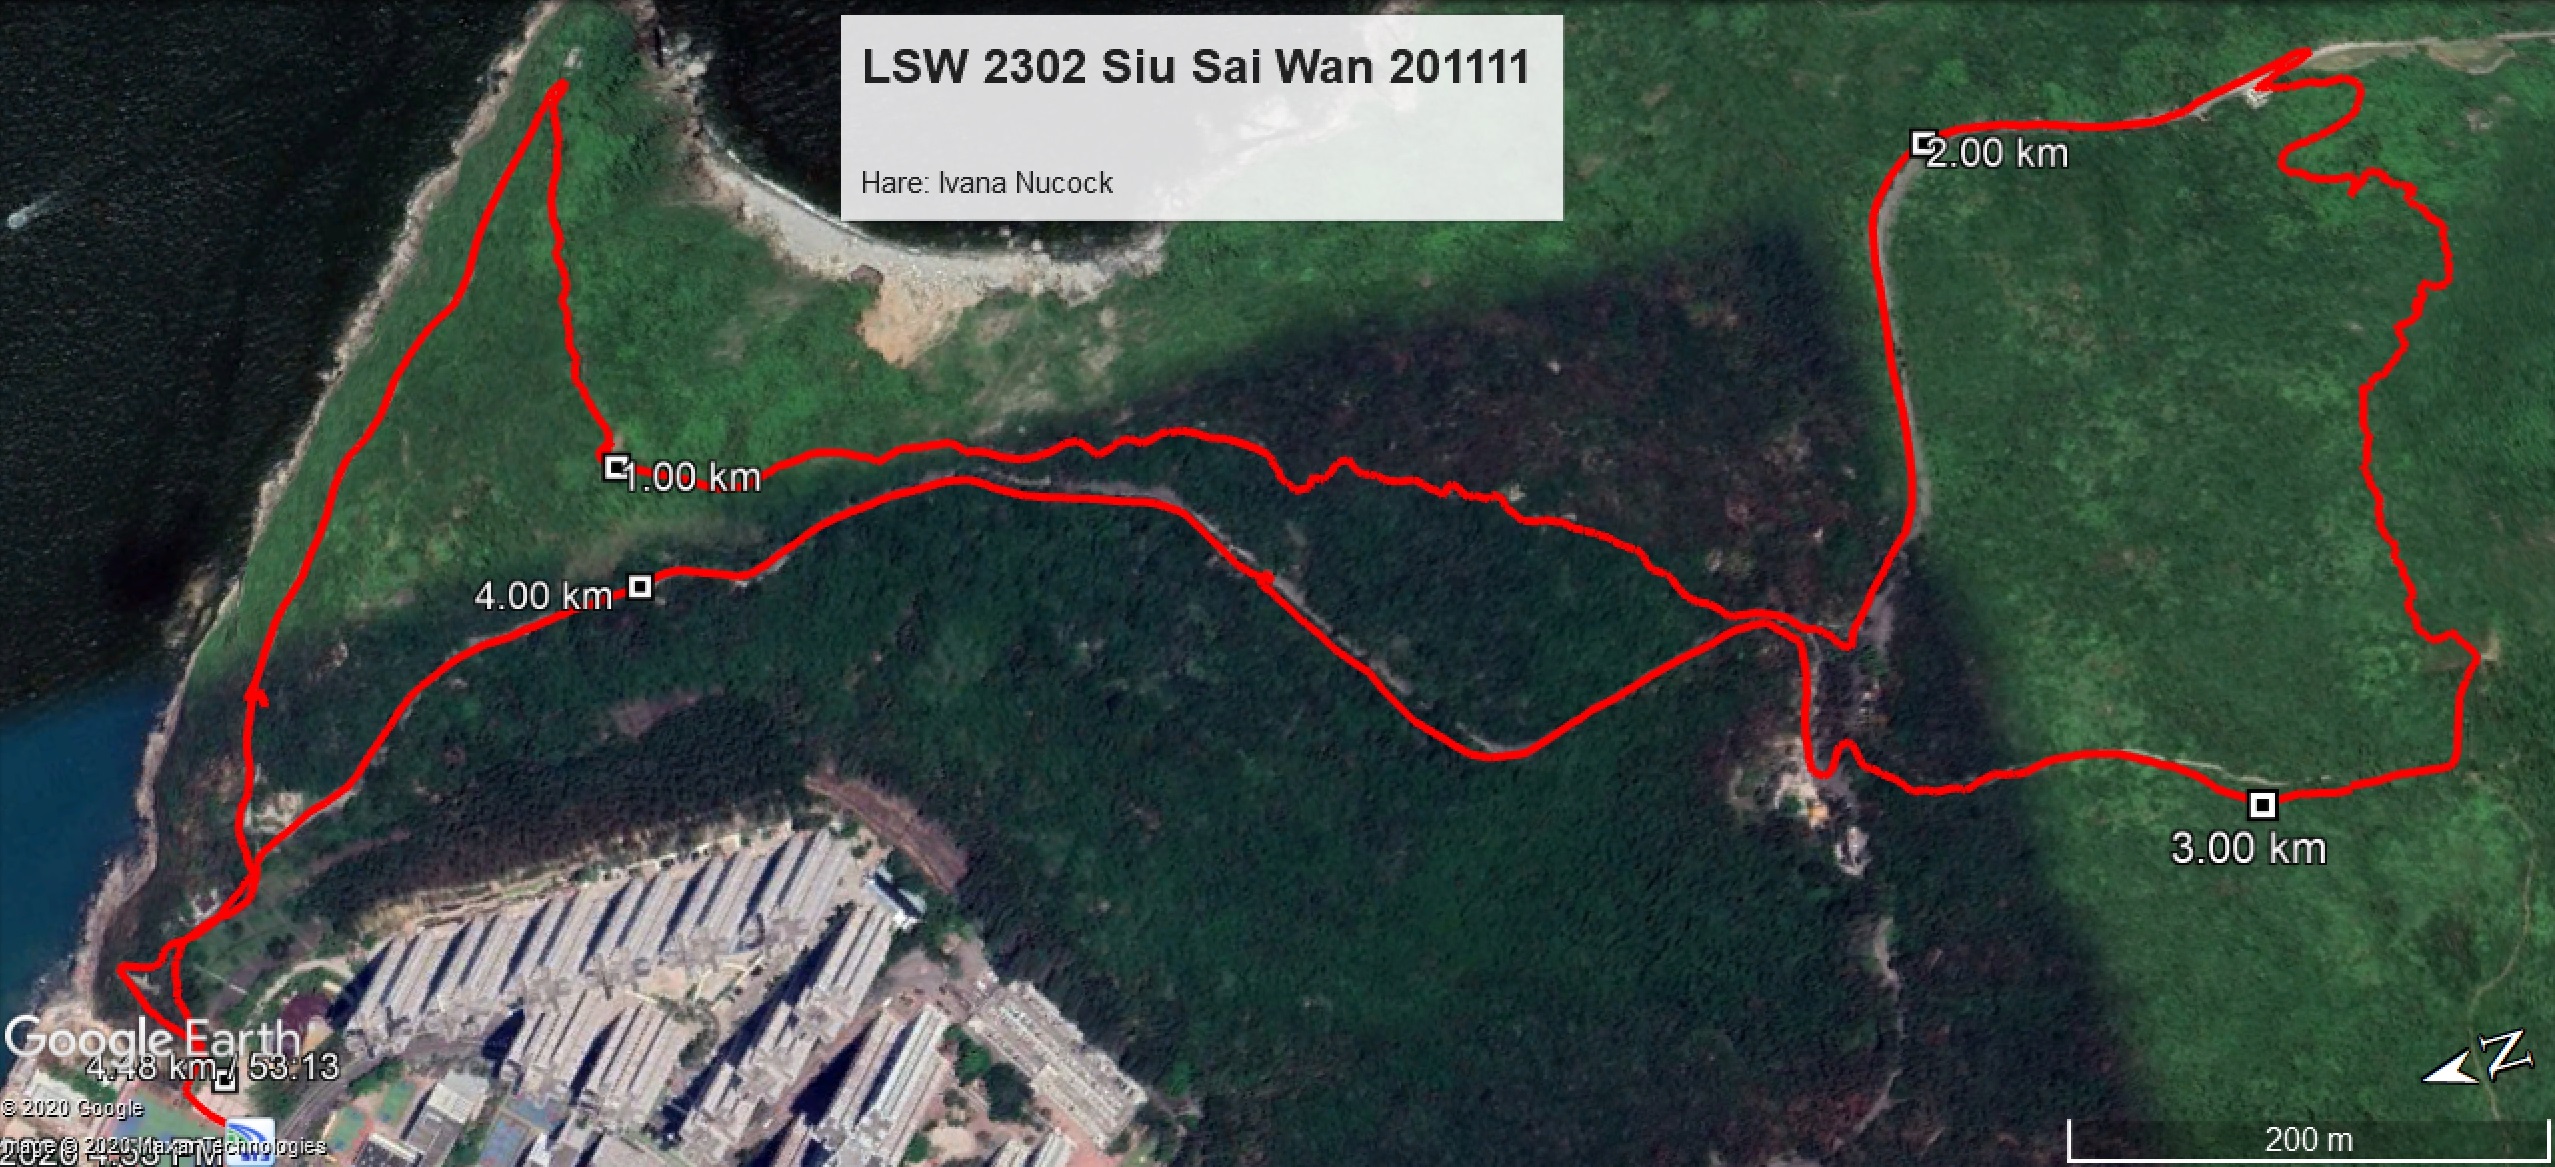 Siu Sai Wan 201111 4.48km 53mins